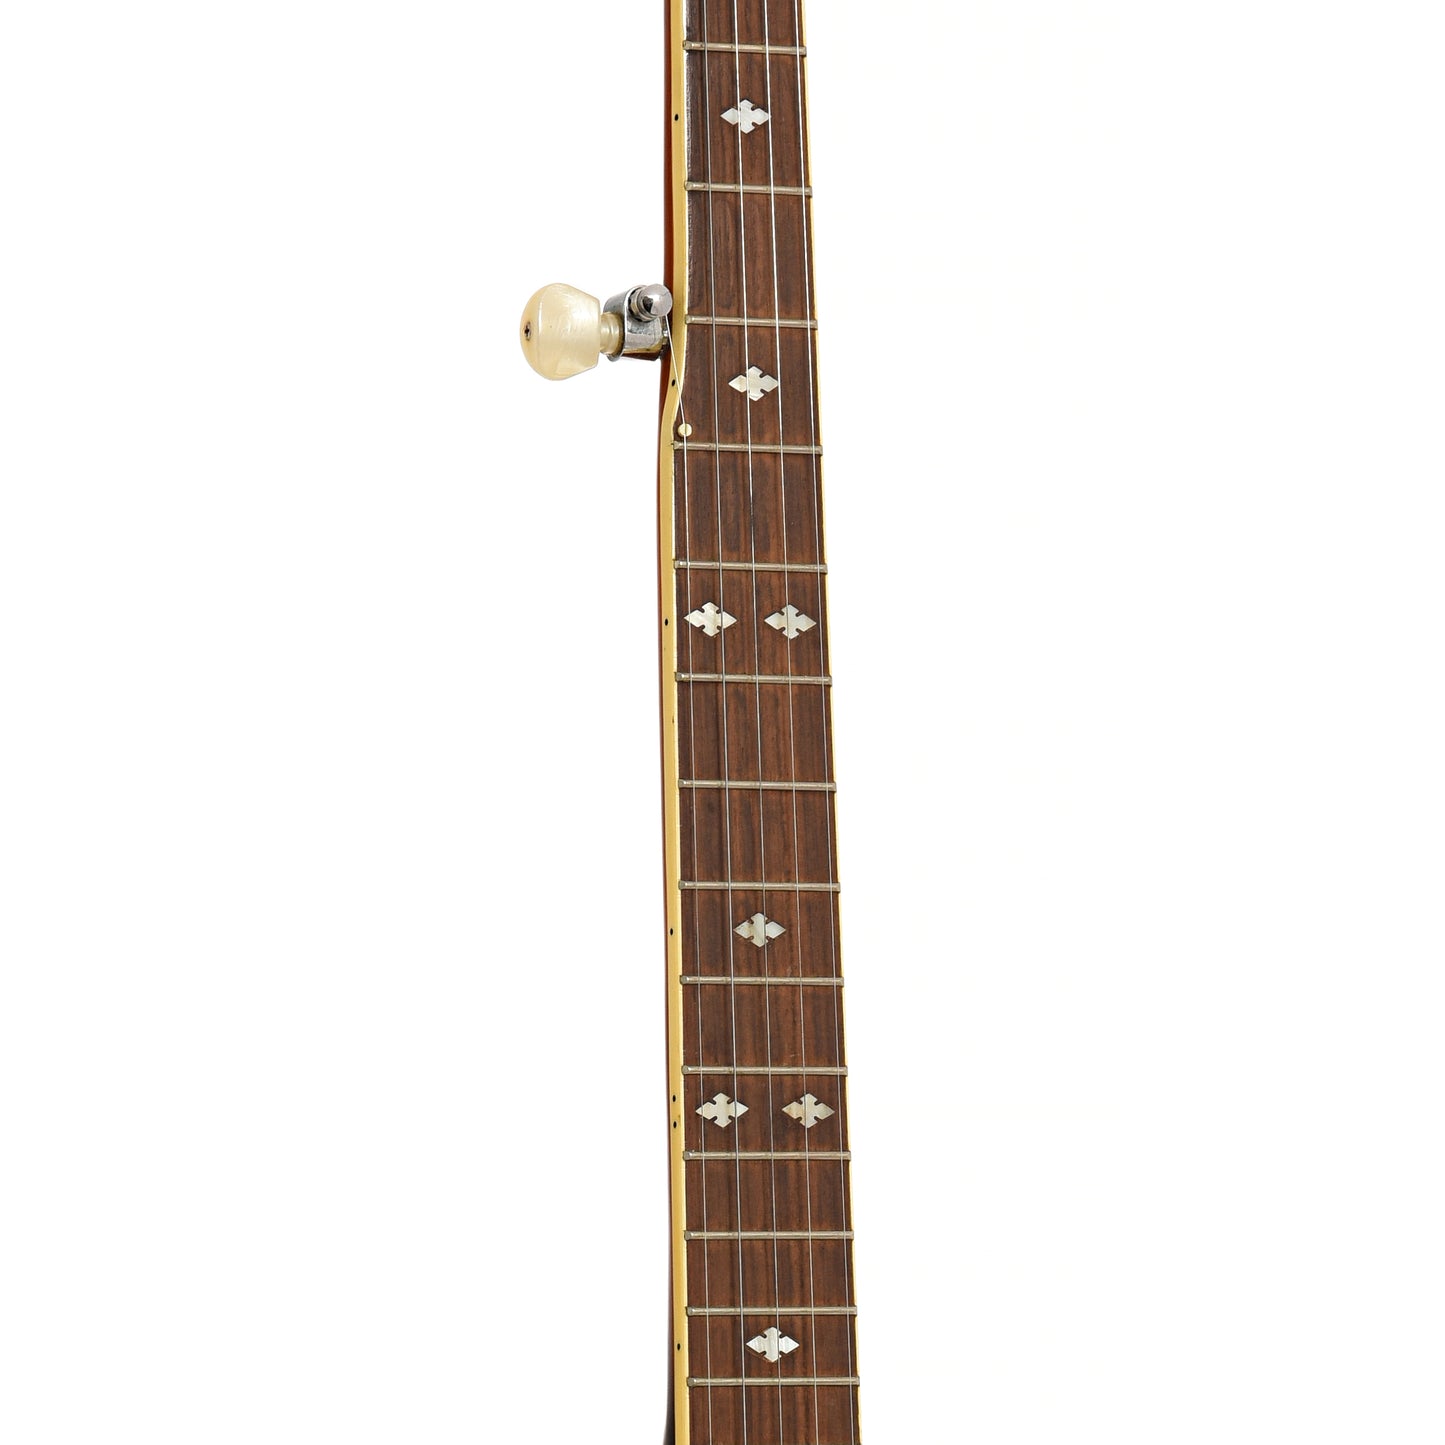 Fretboard of Stagg Deluxe Resonator Banjo